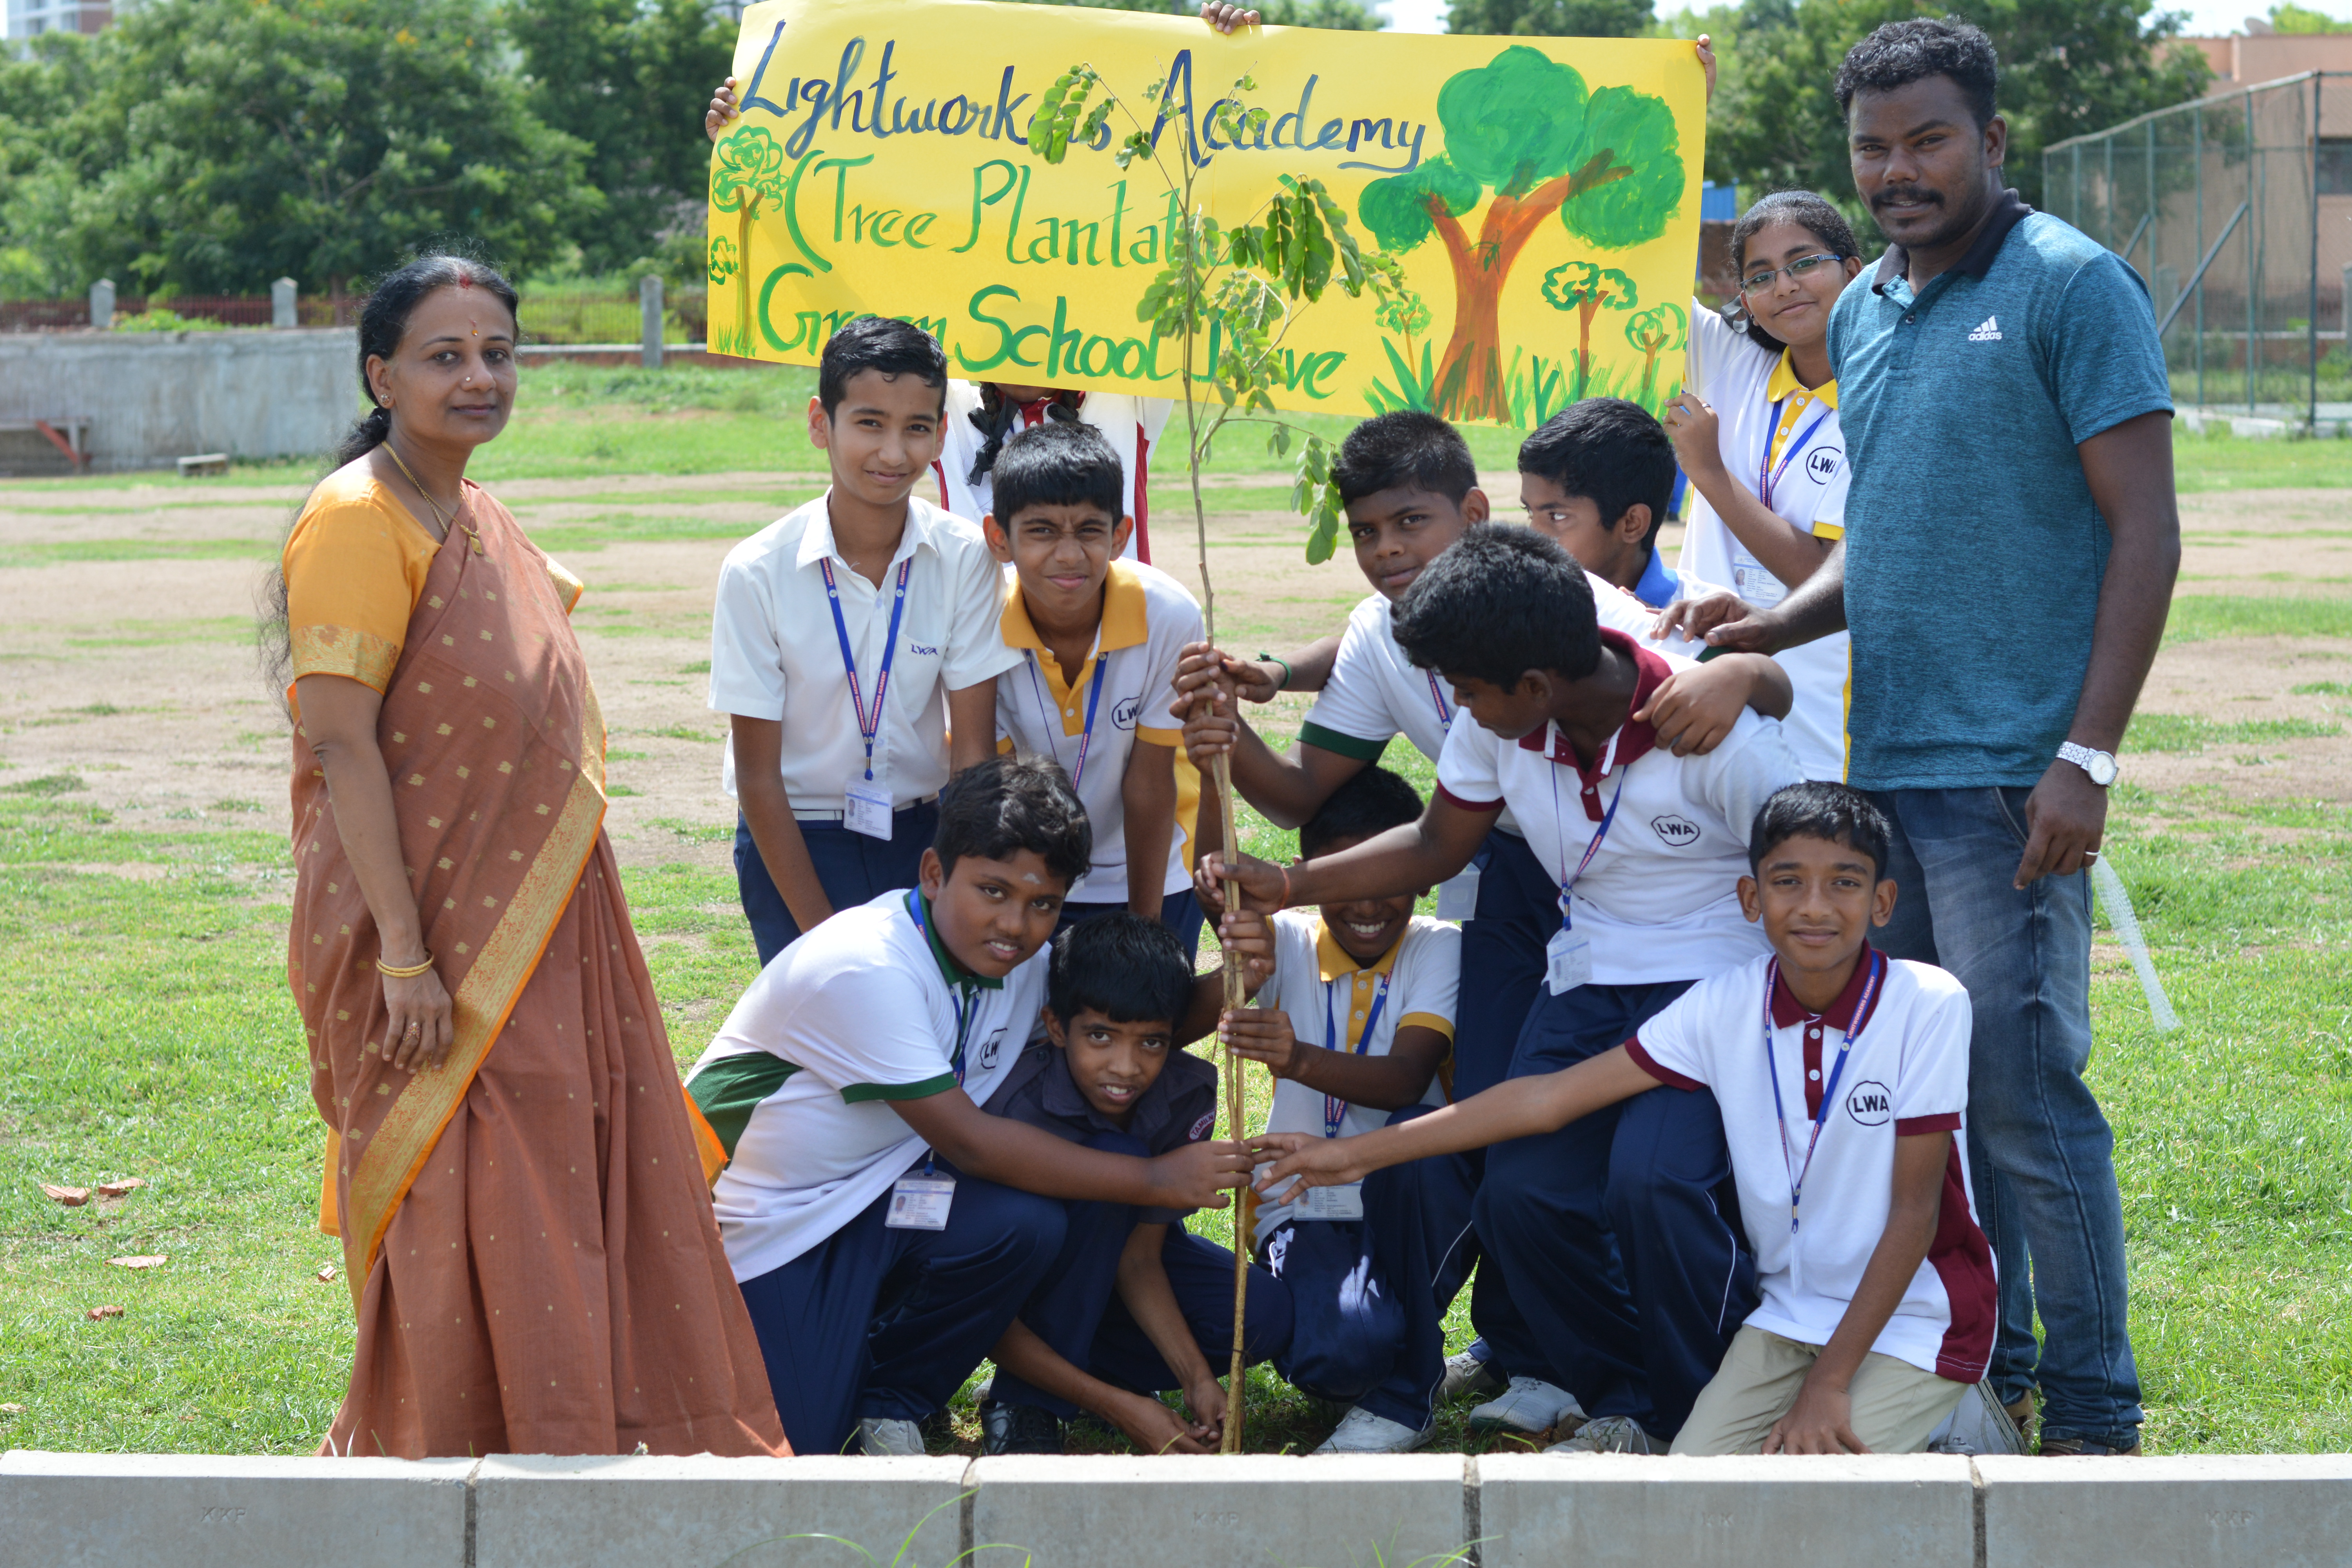 Swachh Bharat & Green School